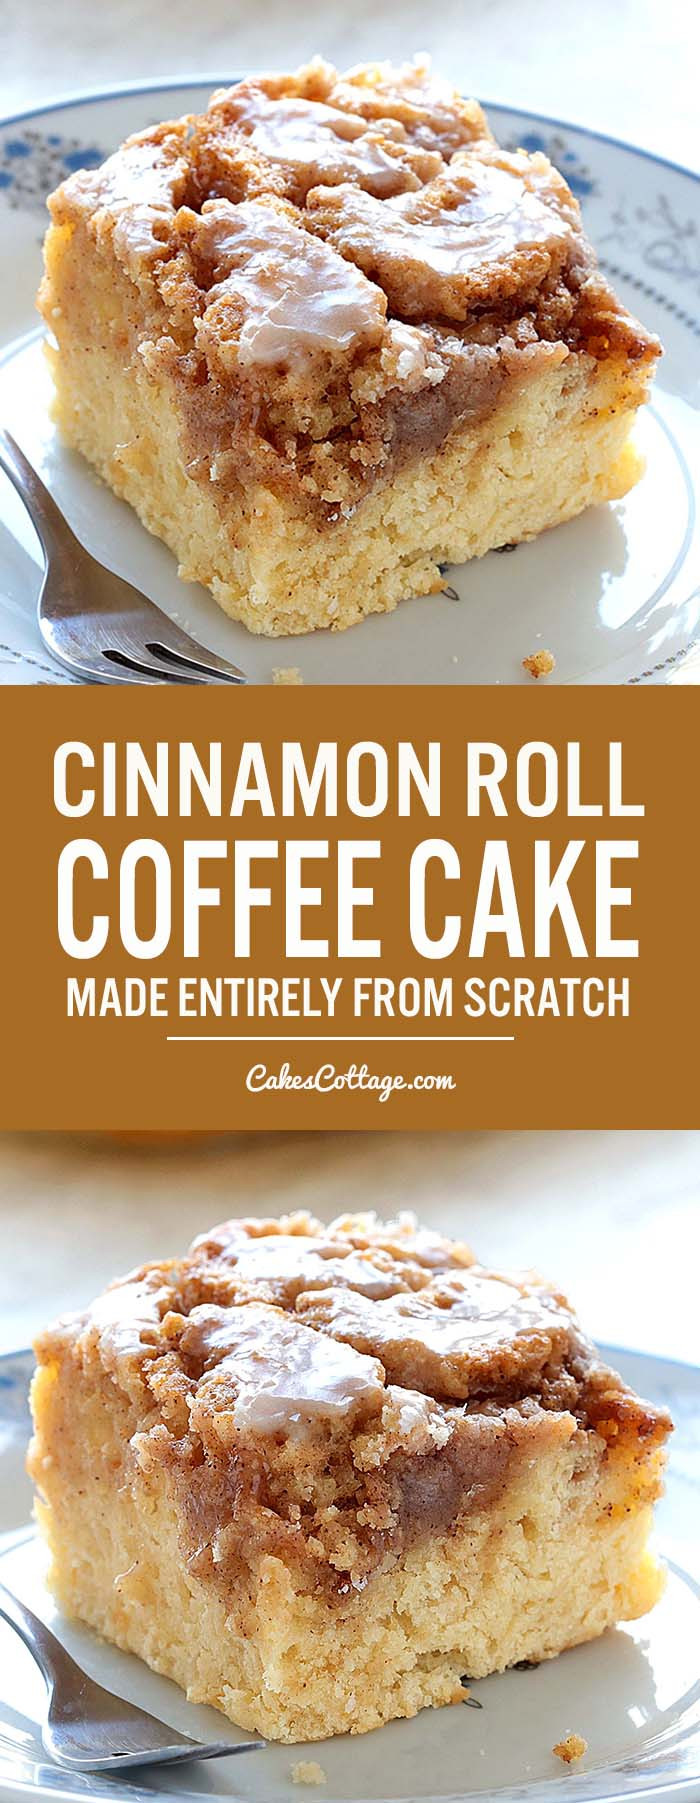 Breakfast Coffee Cake
 Easy Cinnamon Roll Coffee Cake Cakescottage